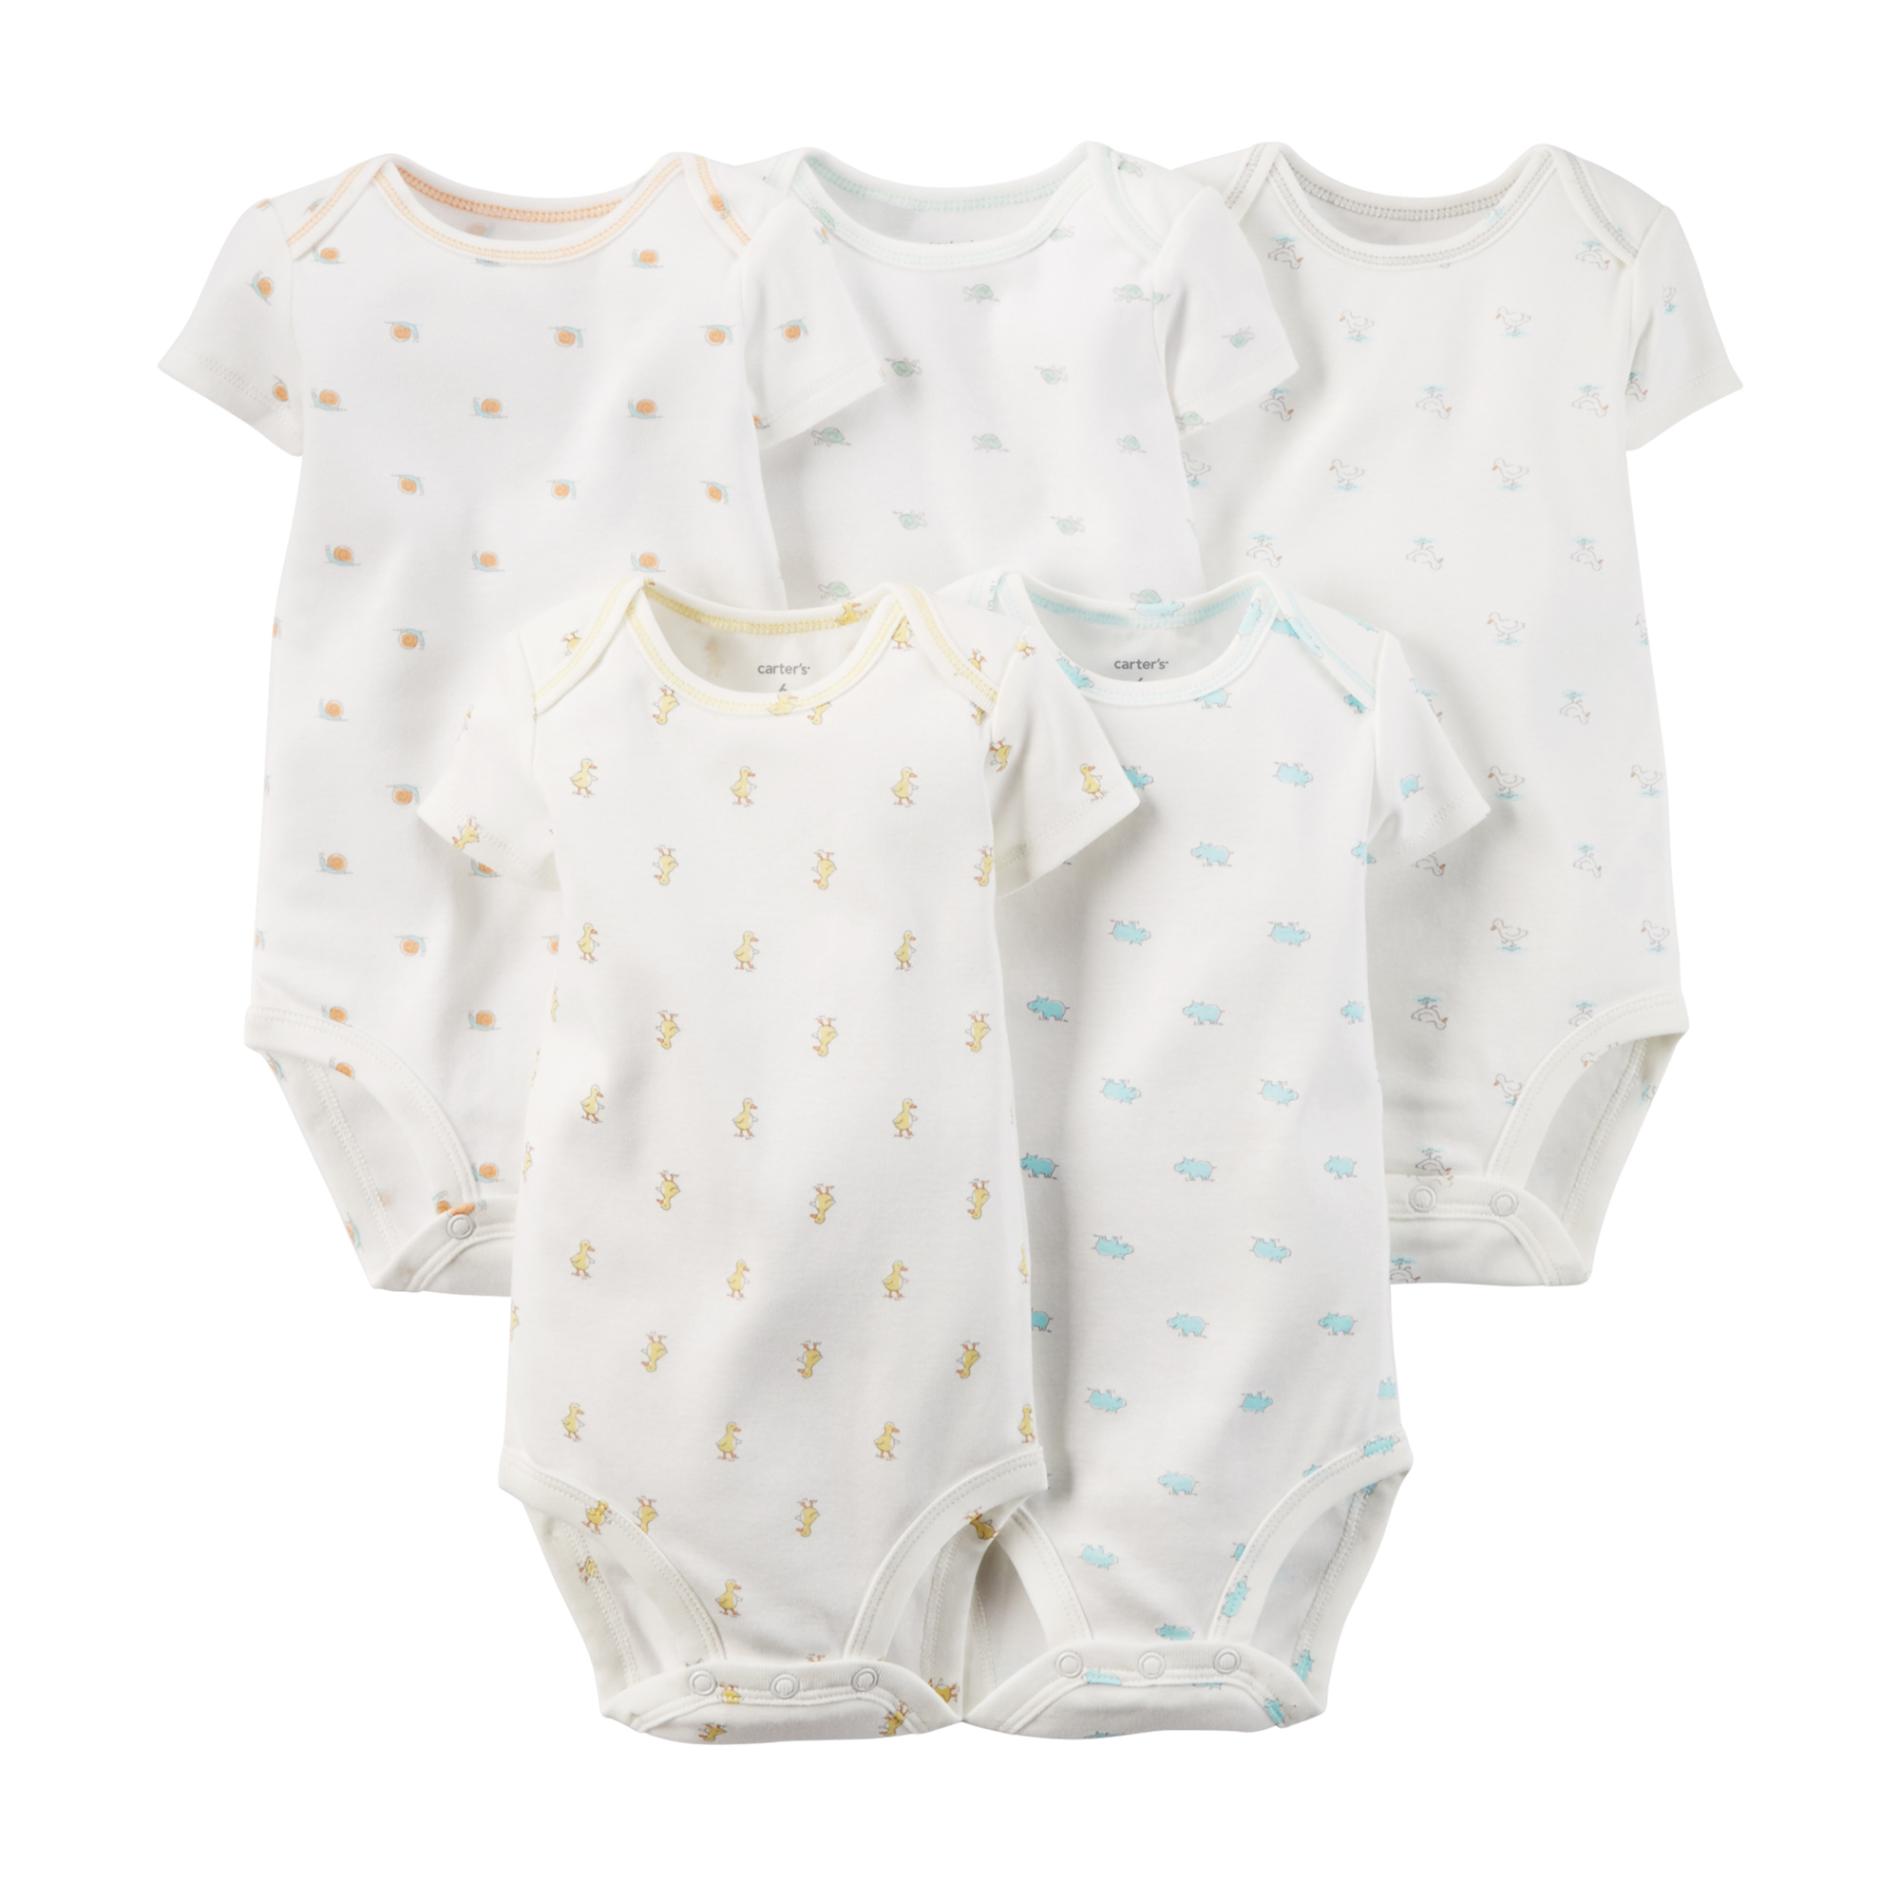 Carter's Newborn & Infant's 5-Pack Short-Sleeve Bodysuits - Assorted Prints